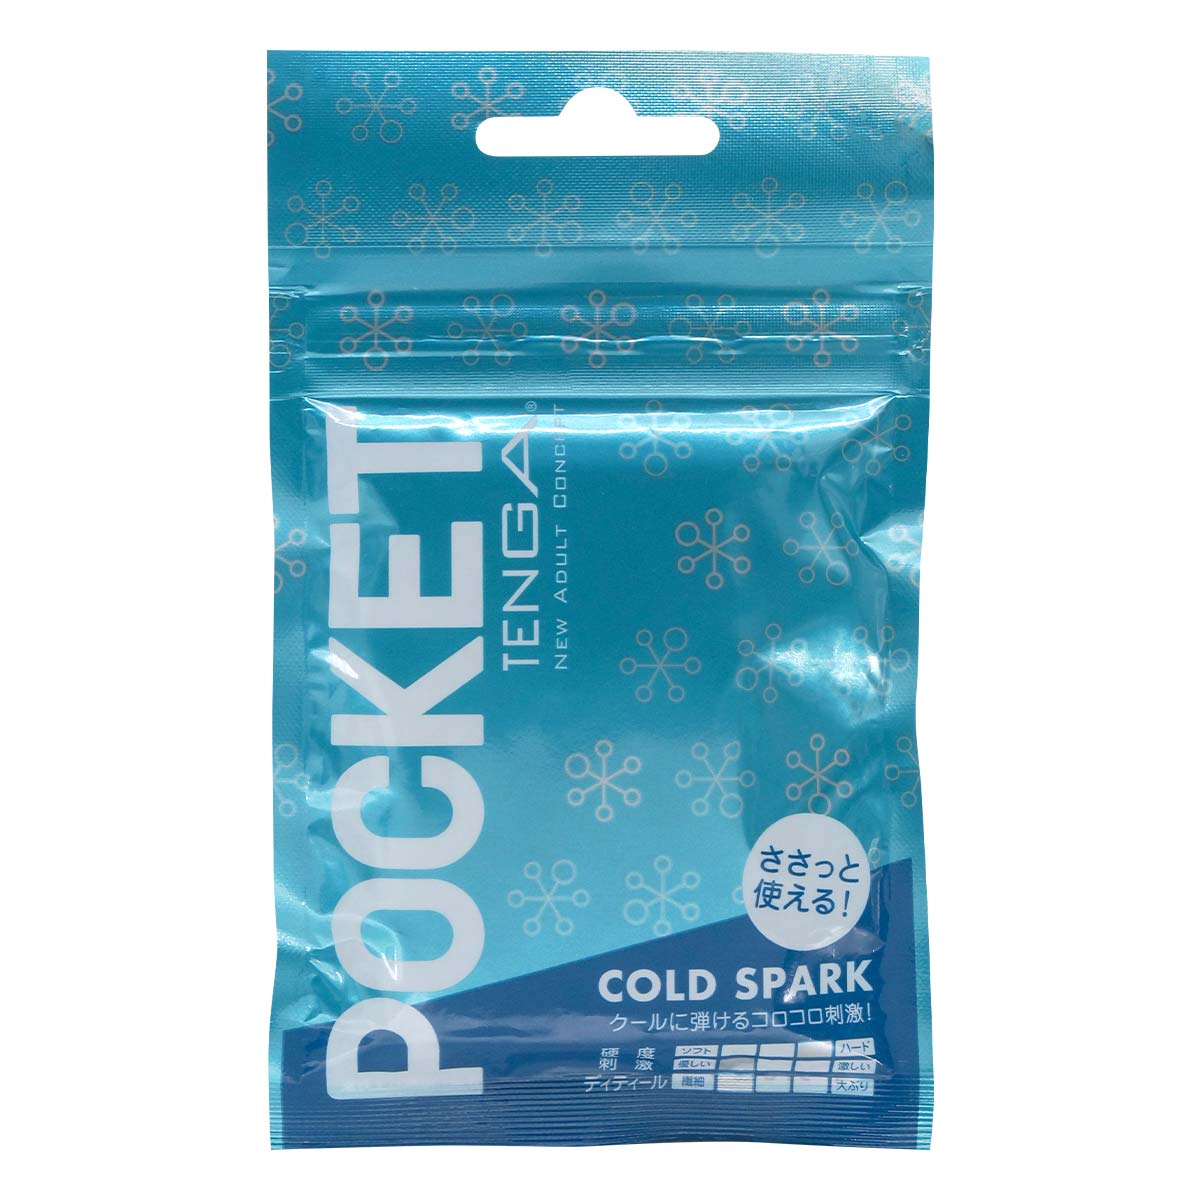 TENGA POCKET COLD SPARK Pocket Pussy-p_2